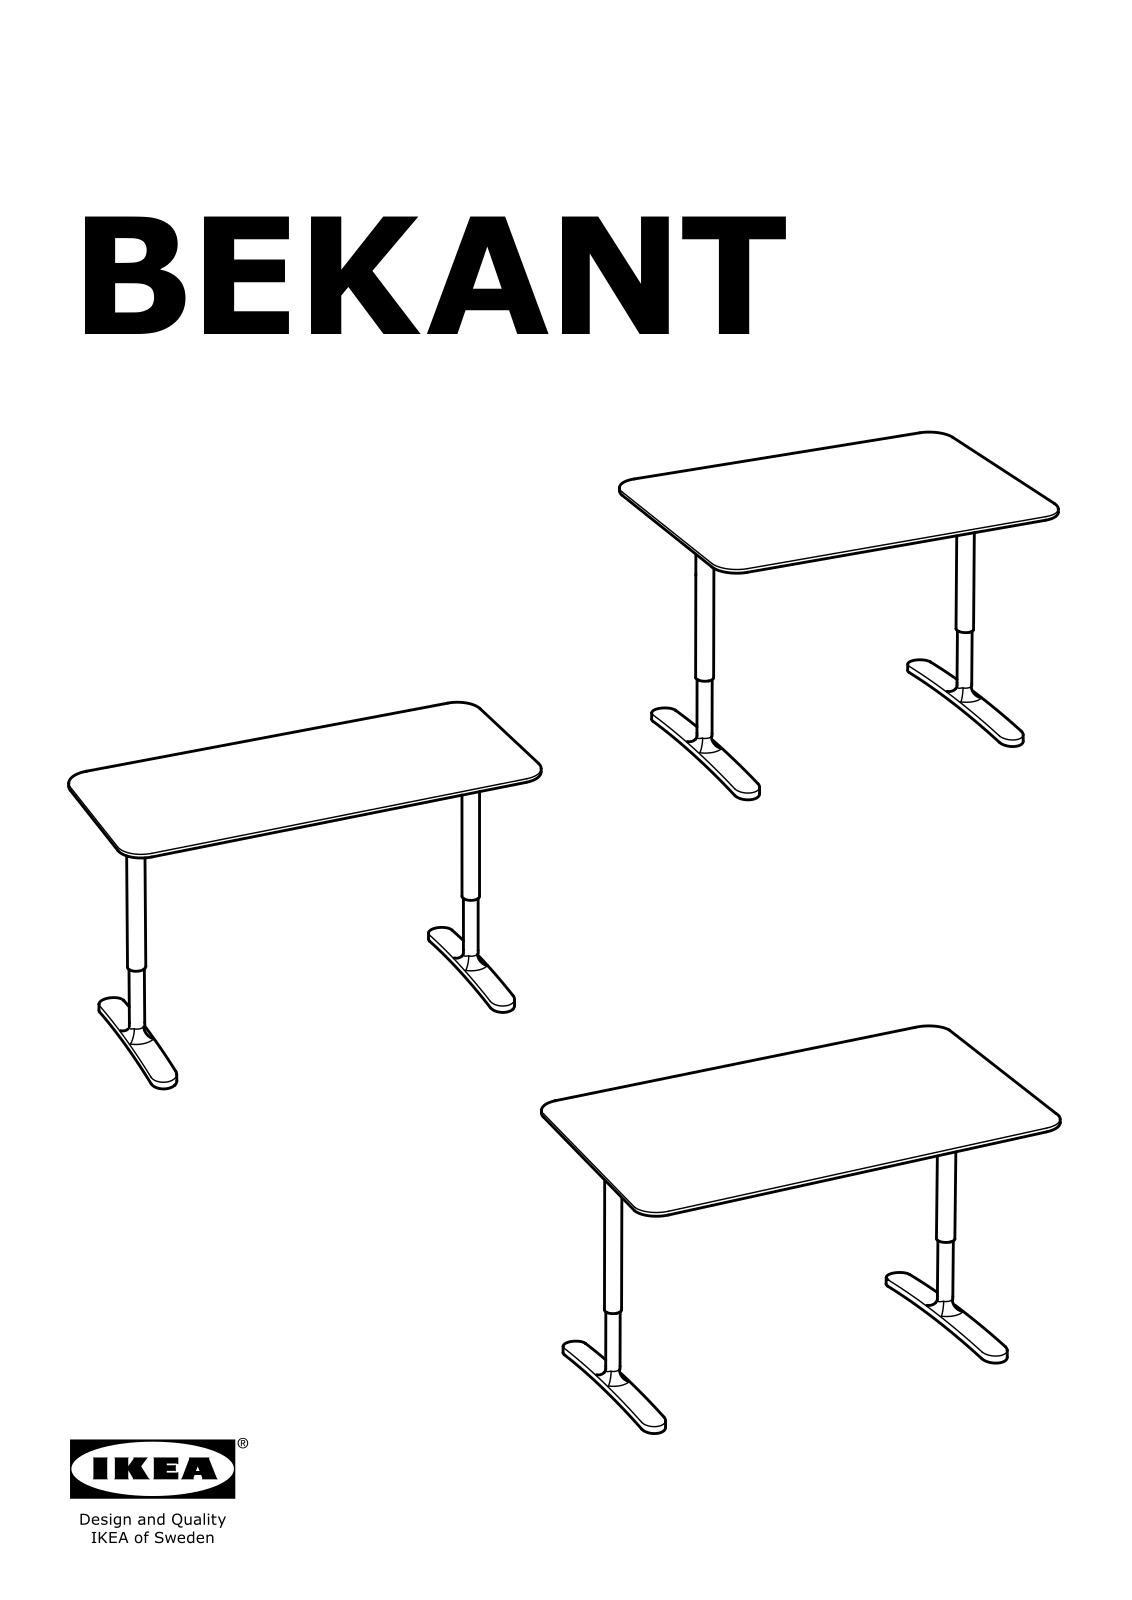 IKEA BEKANT User Manual